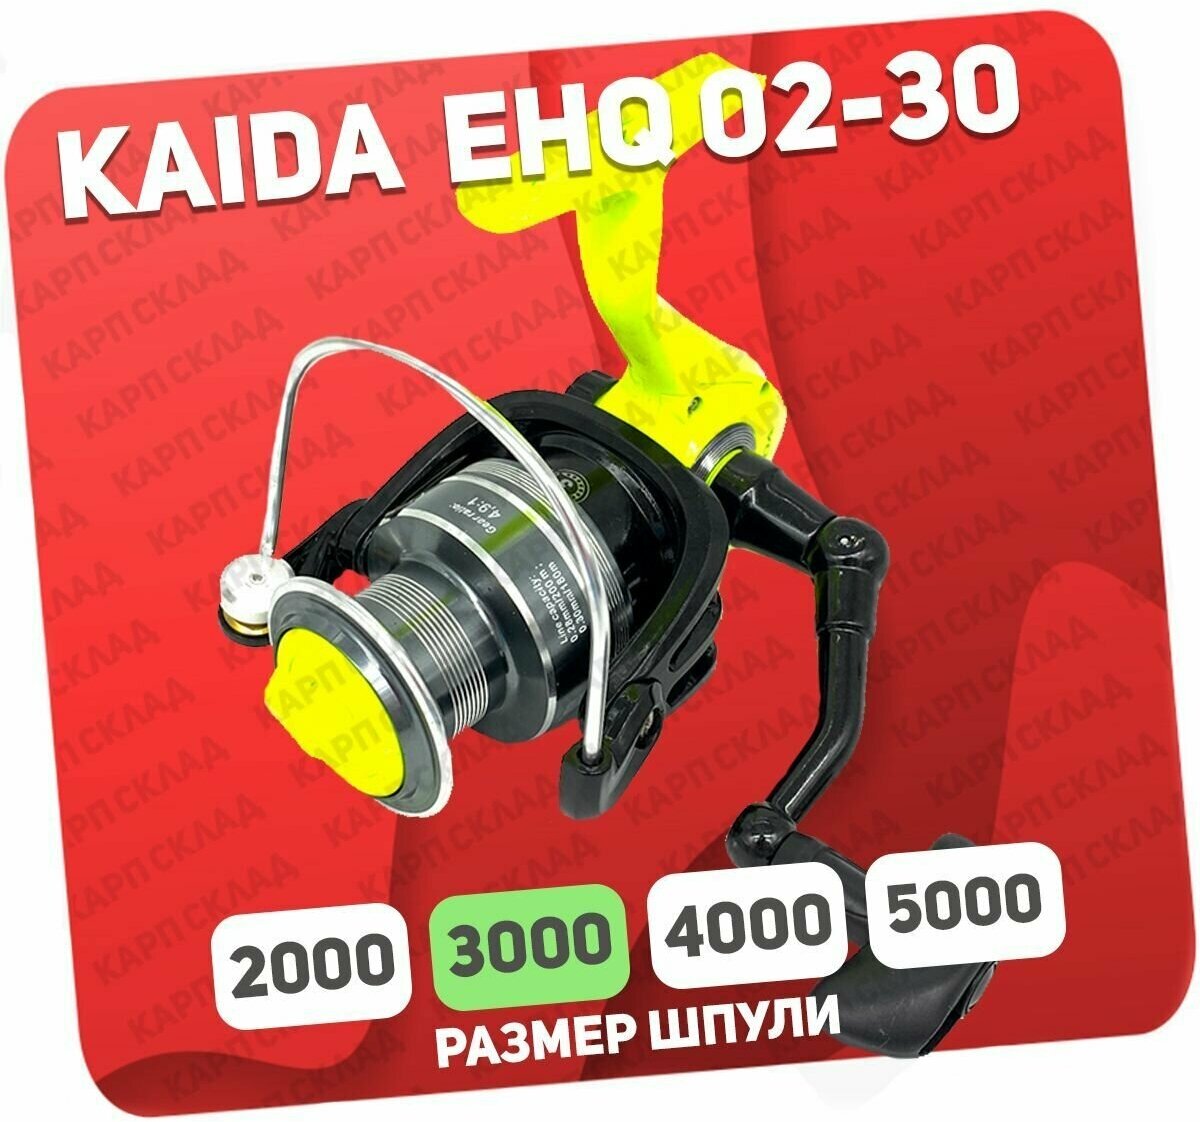 Катушка рыболовная KAIDA EHQ 02 3000 для спиннинга